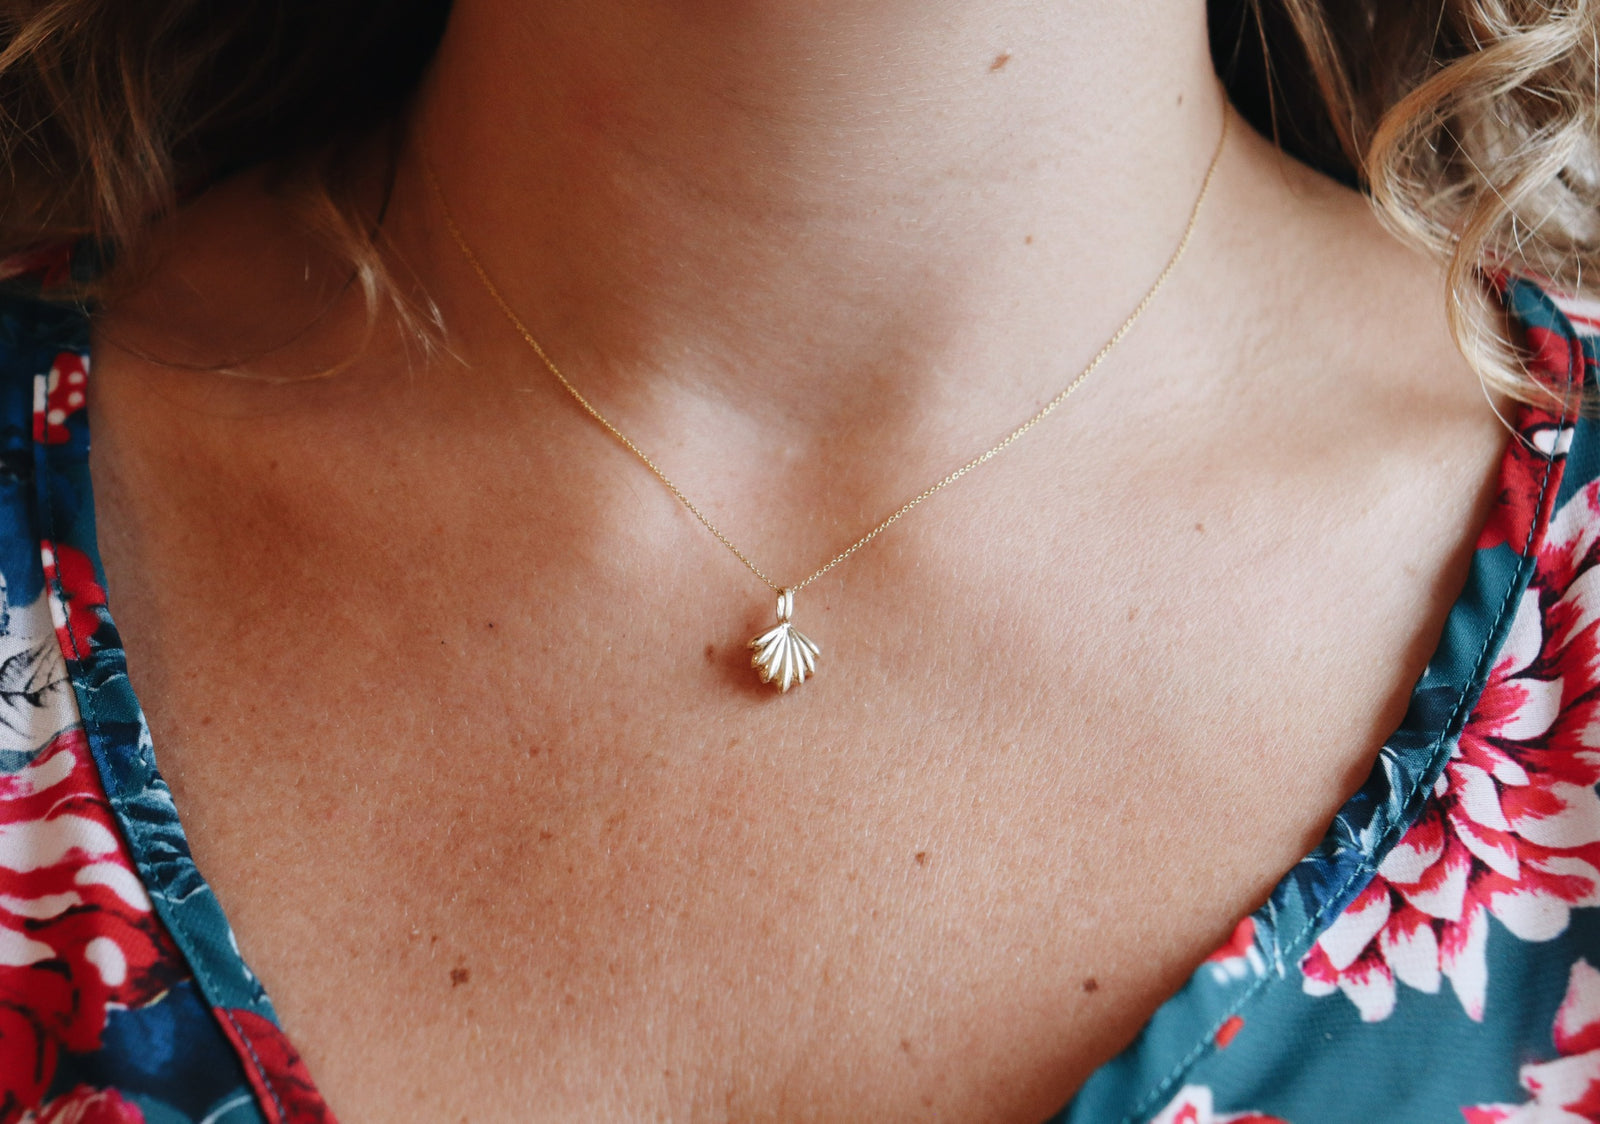 Mini Shell Necklace